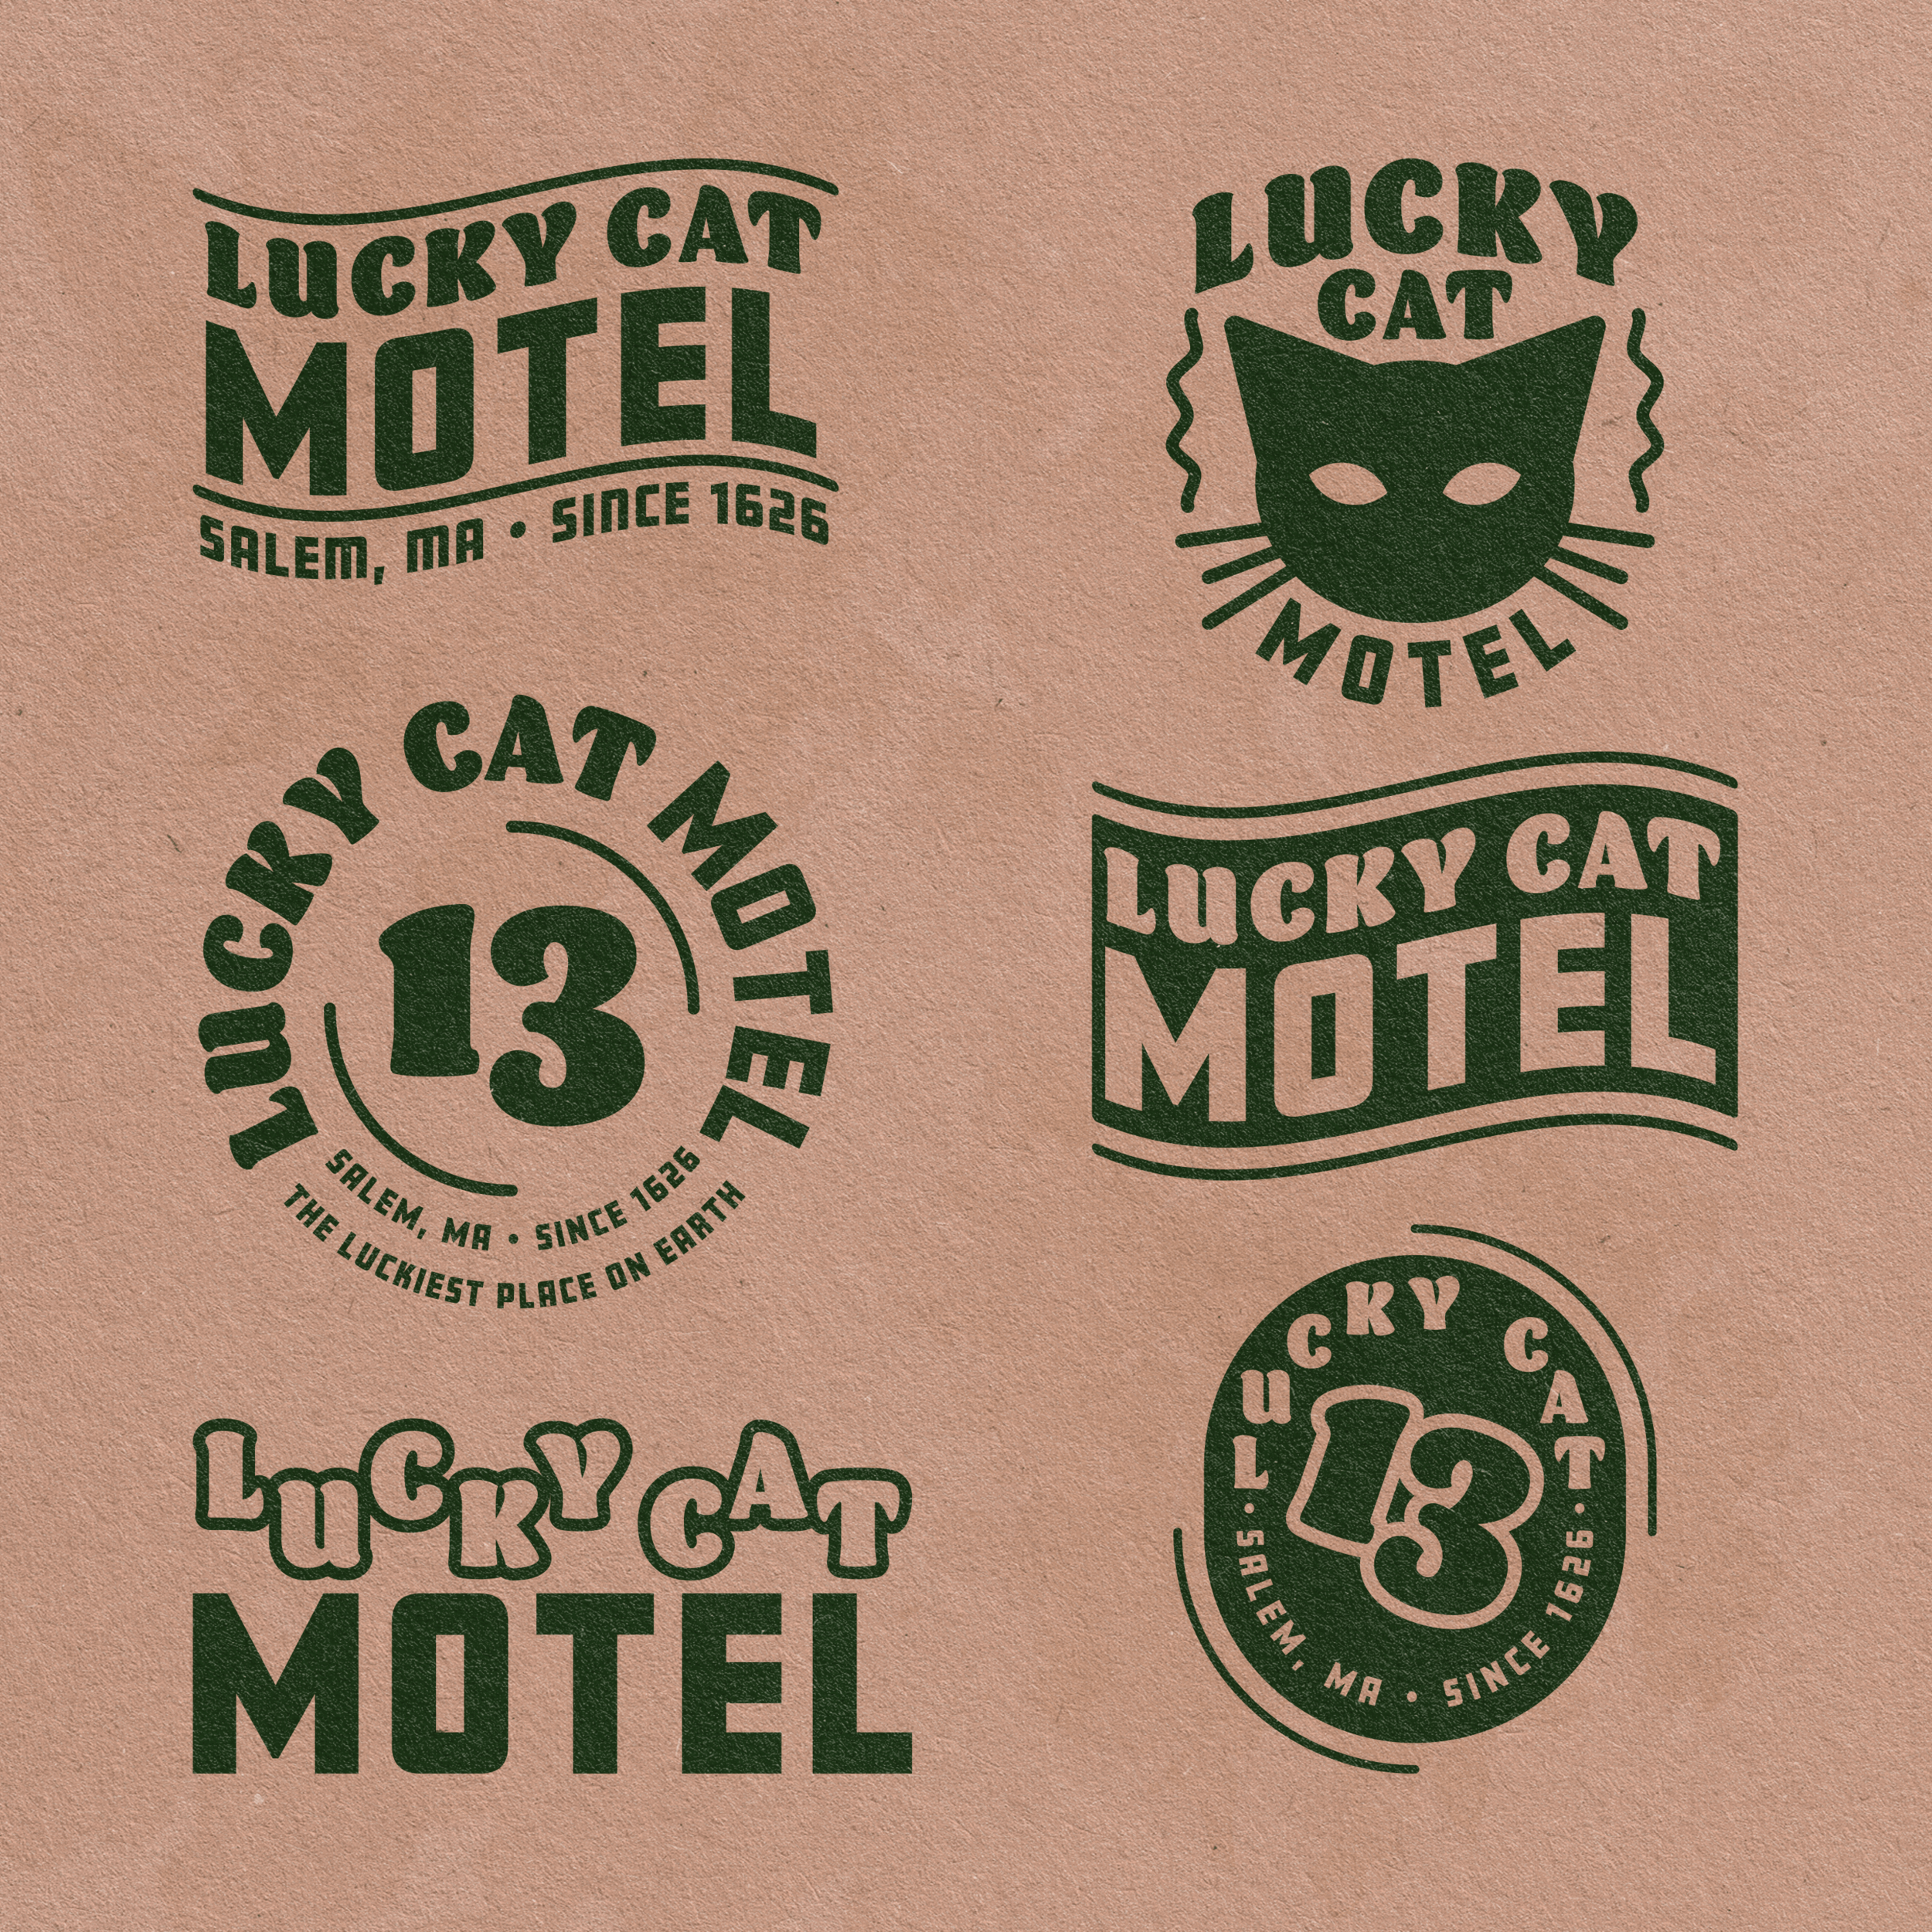 LuckyCatMotel_Branding_Green.png